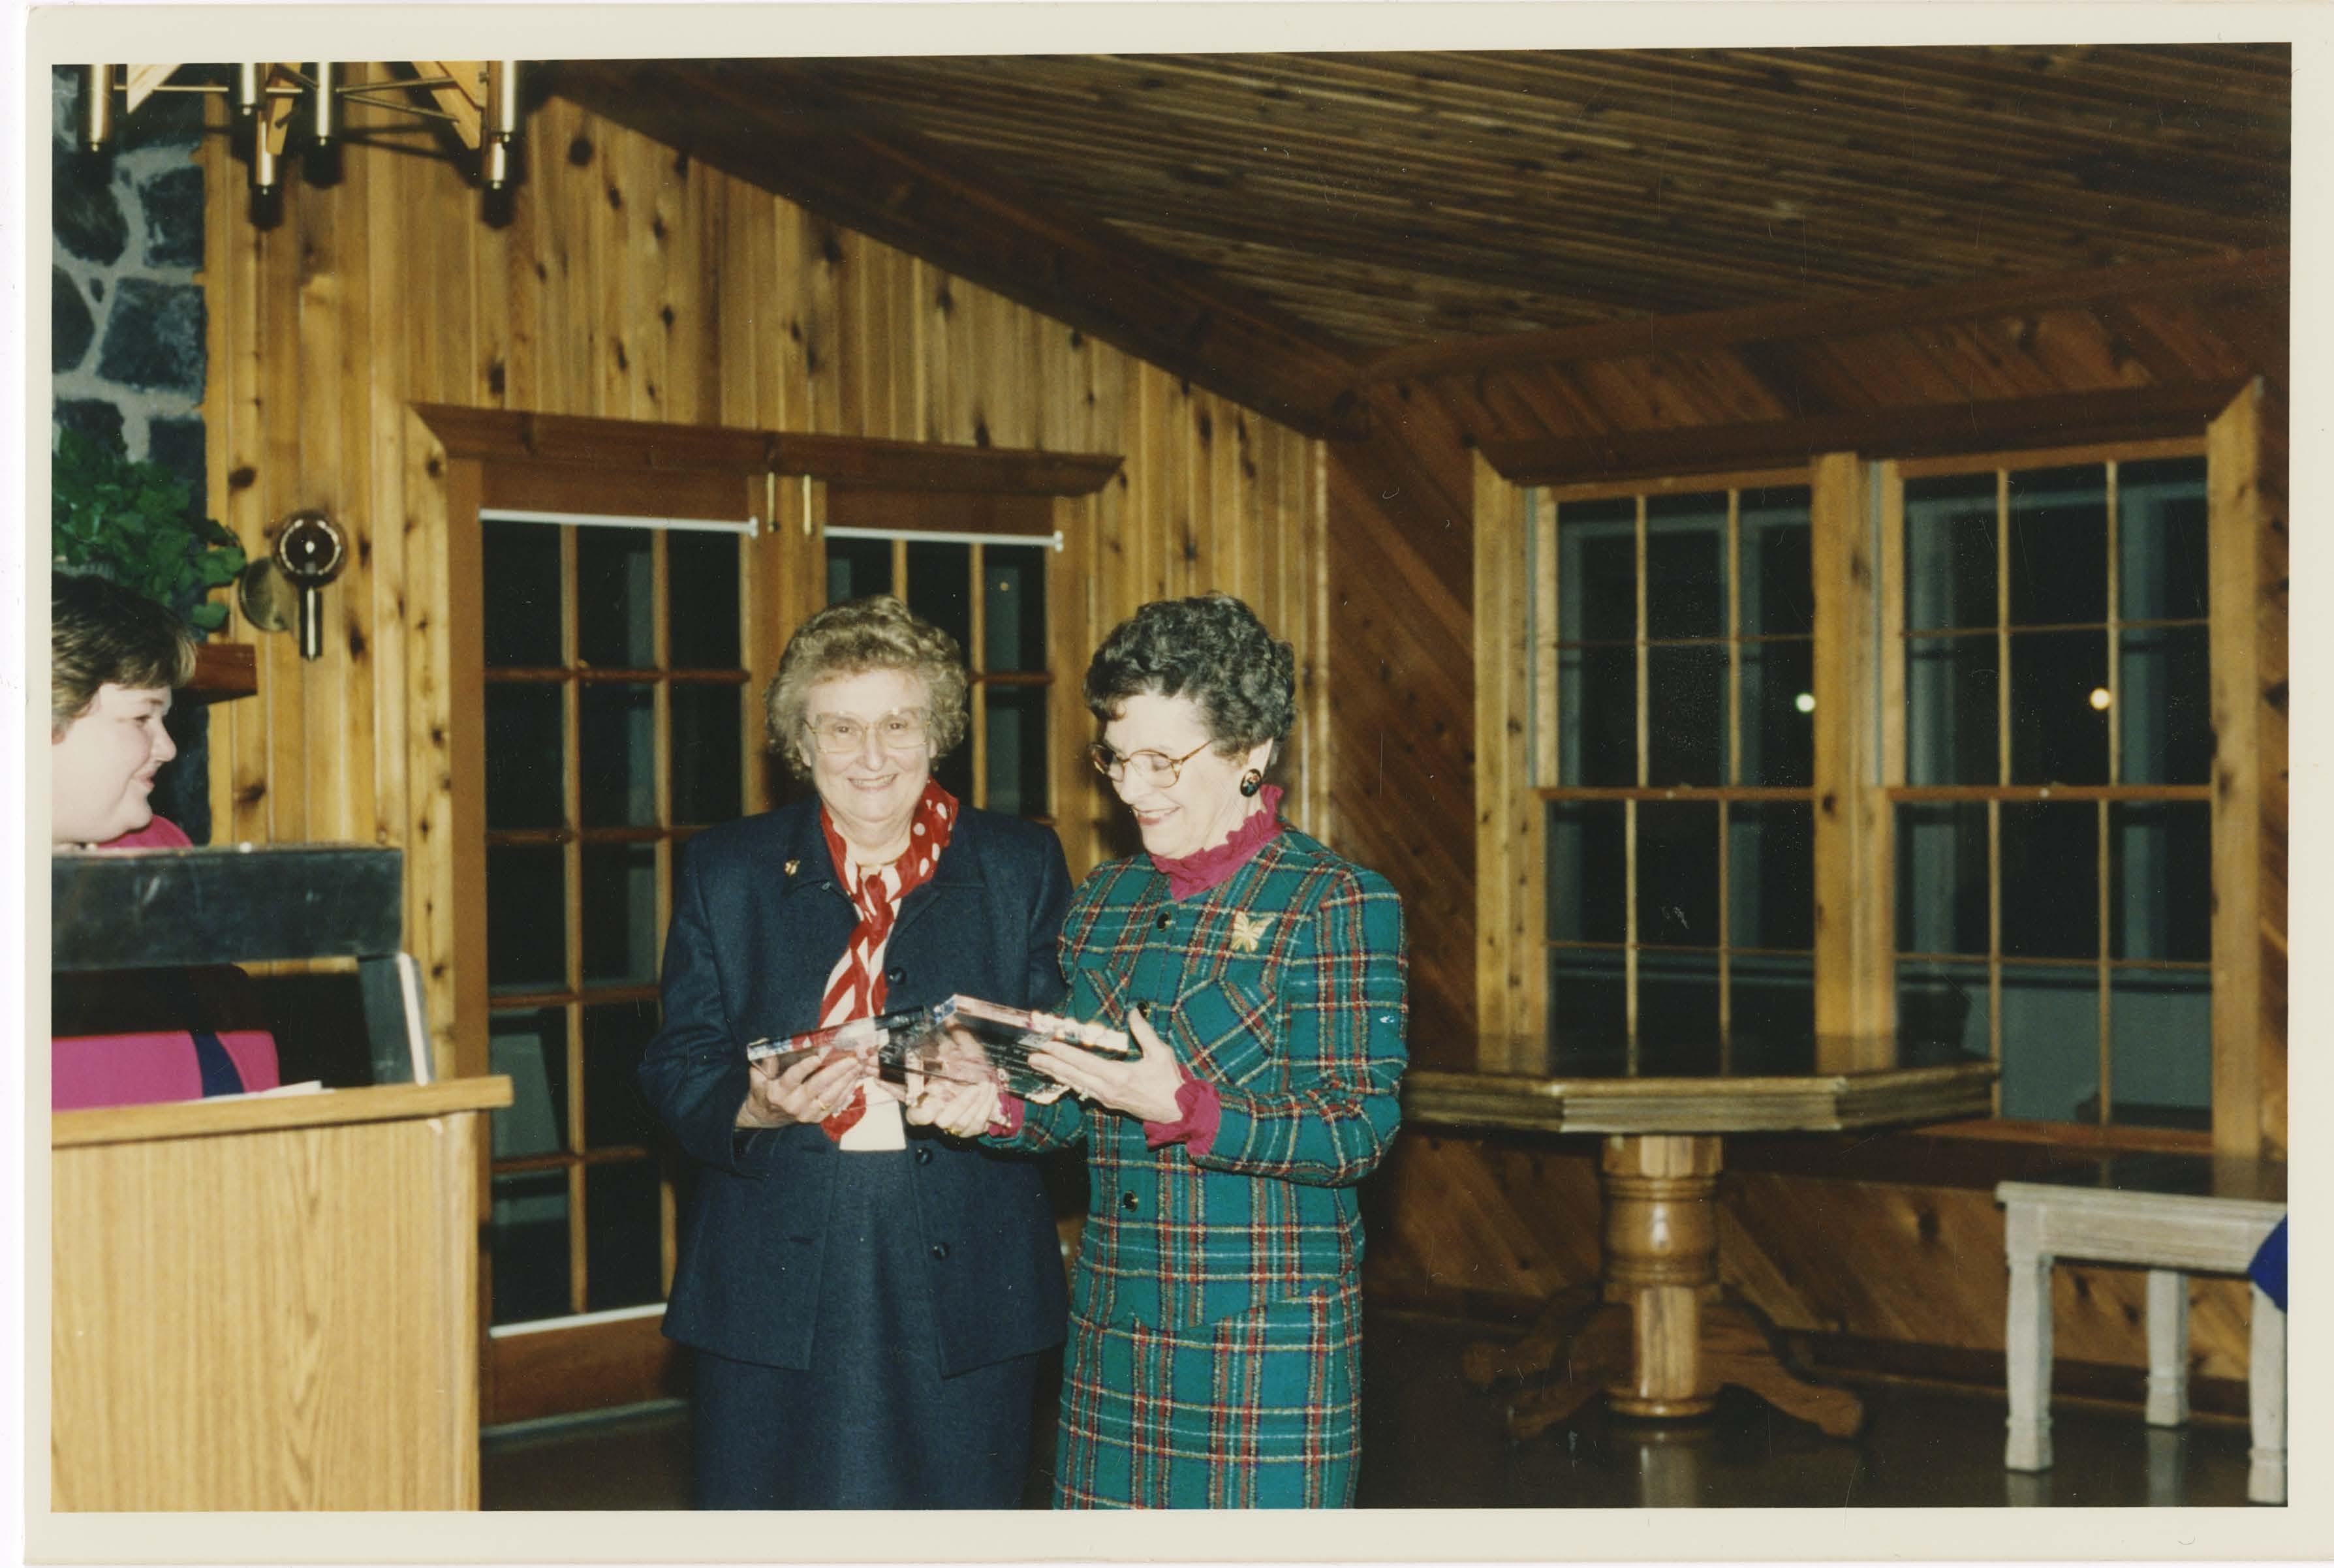 Mary Kelly President 1985-87, Environmental watchdog, receives an award